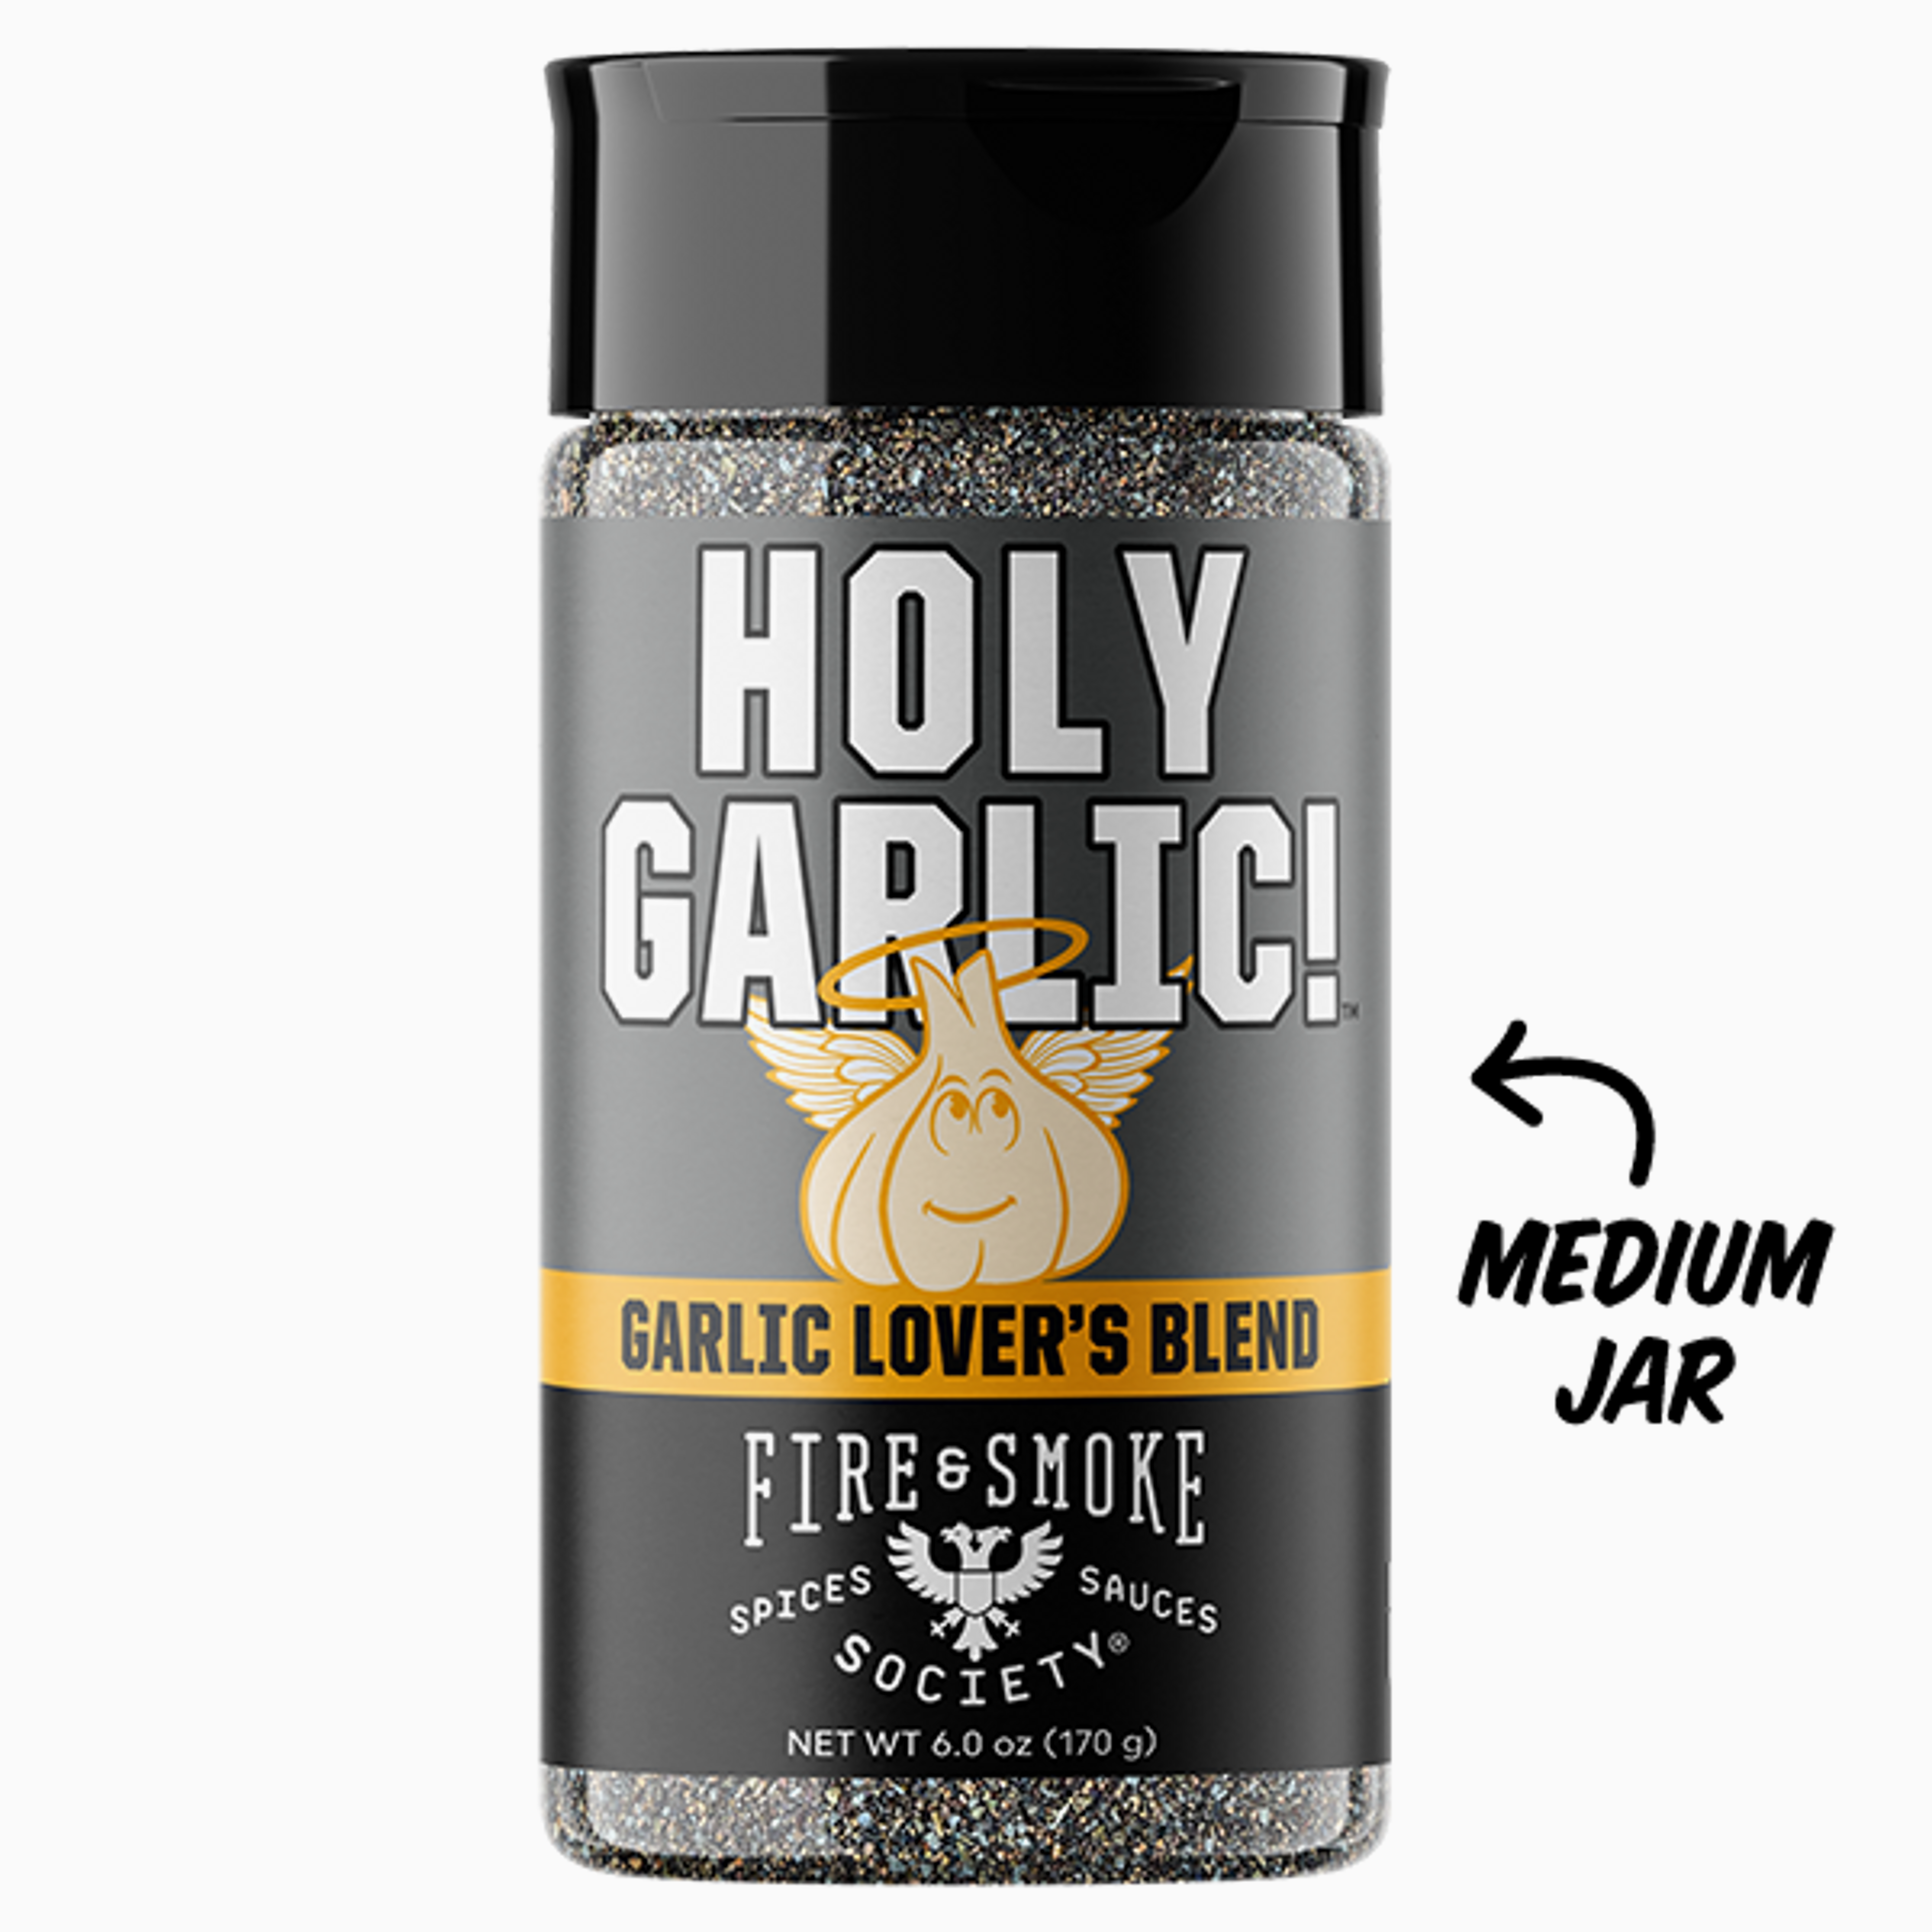 Holy Garlic!